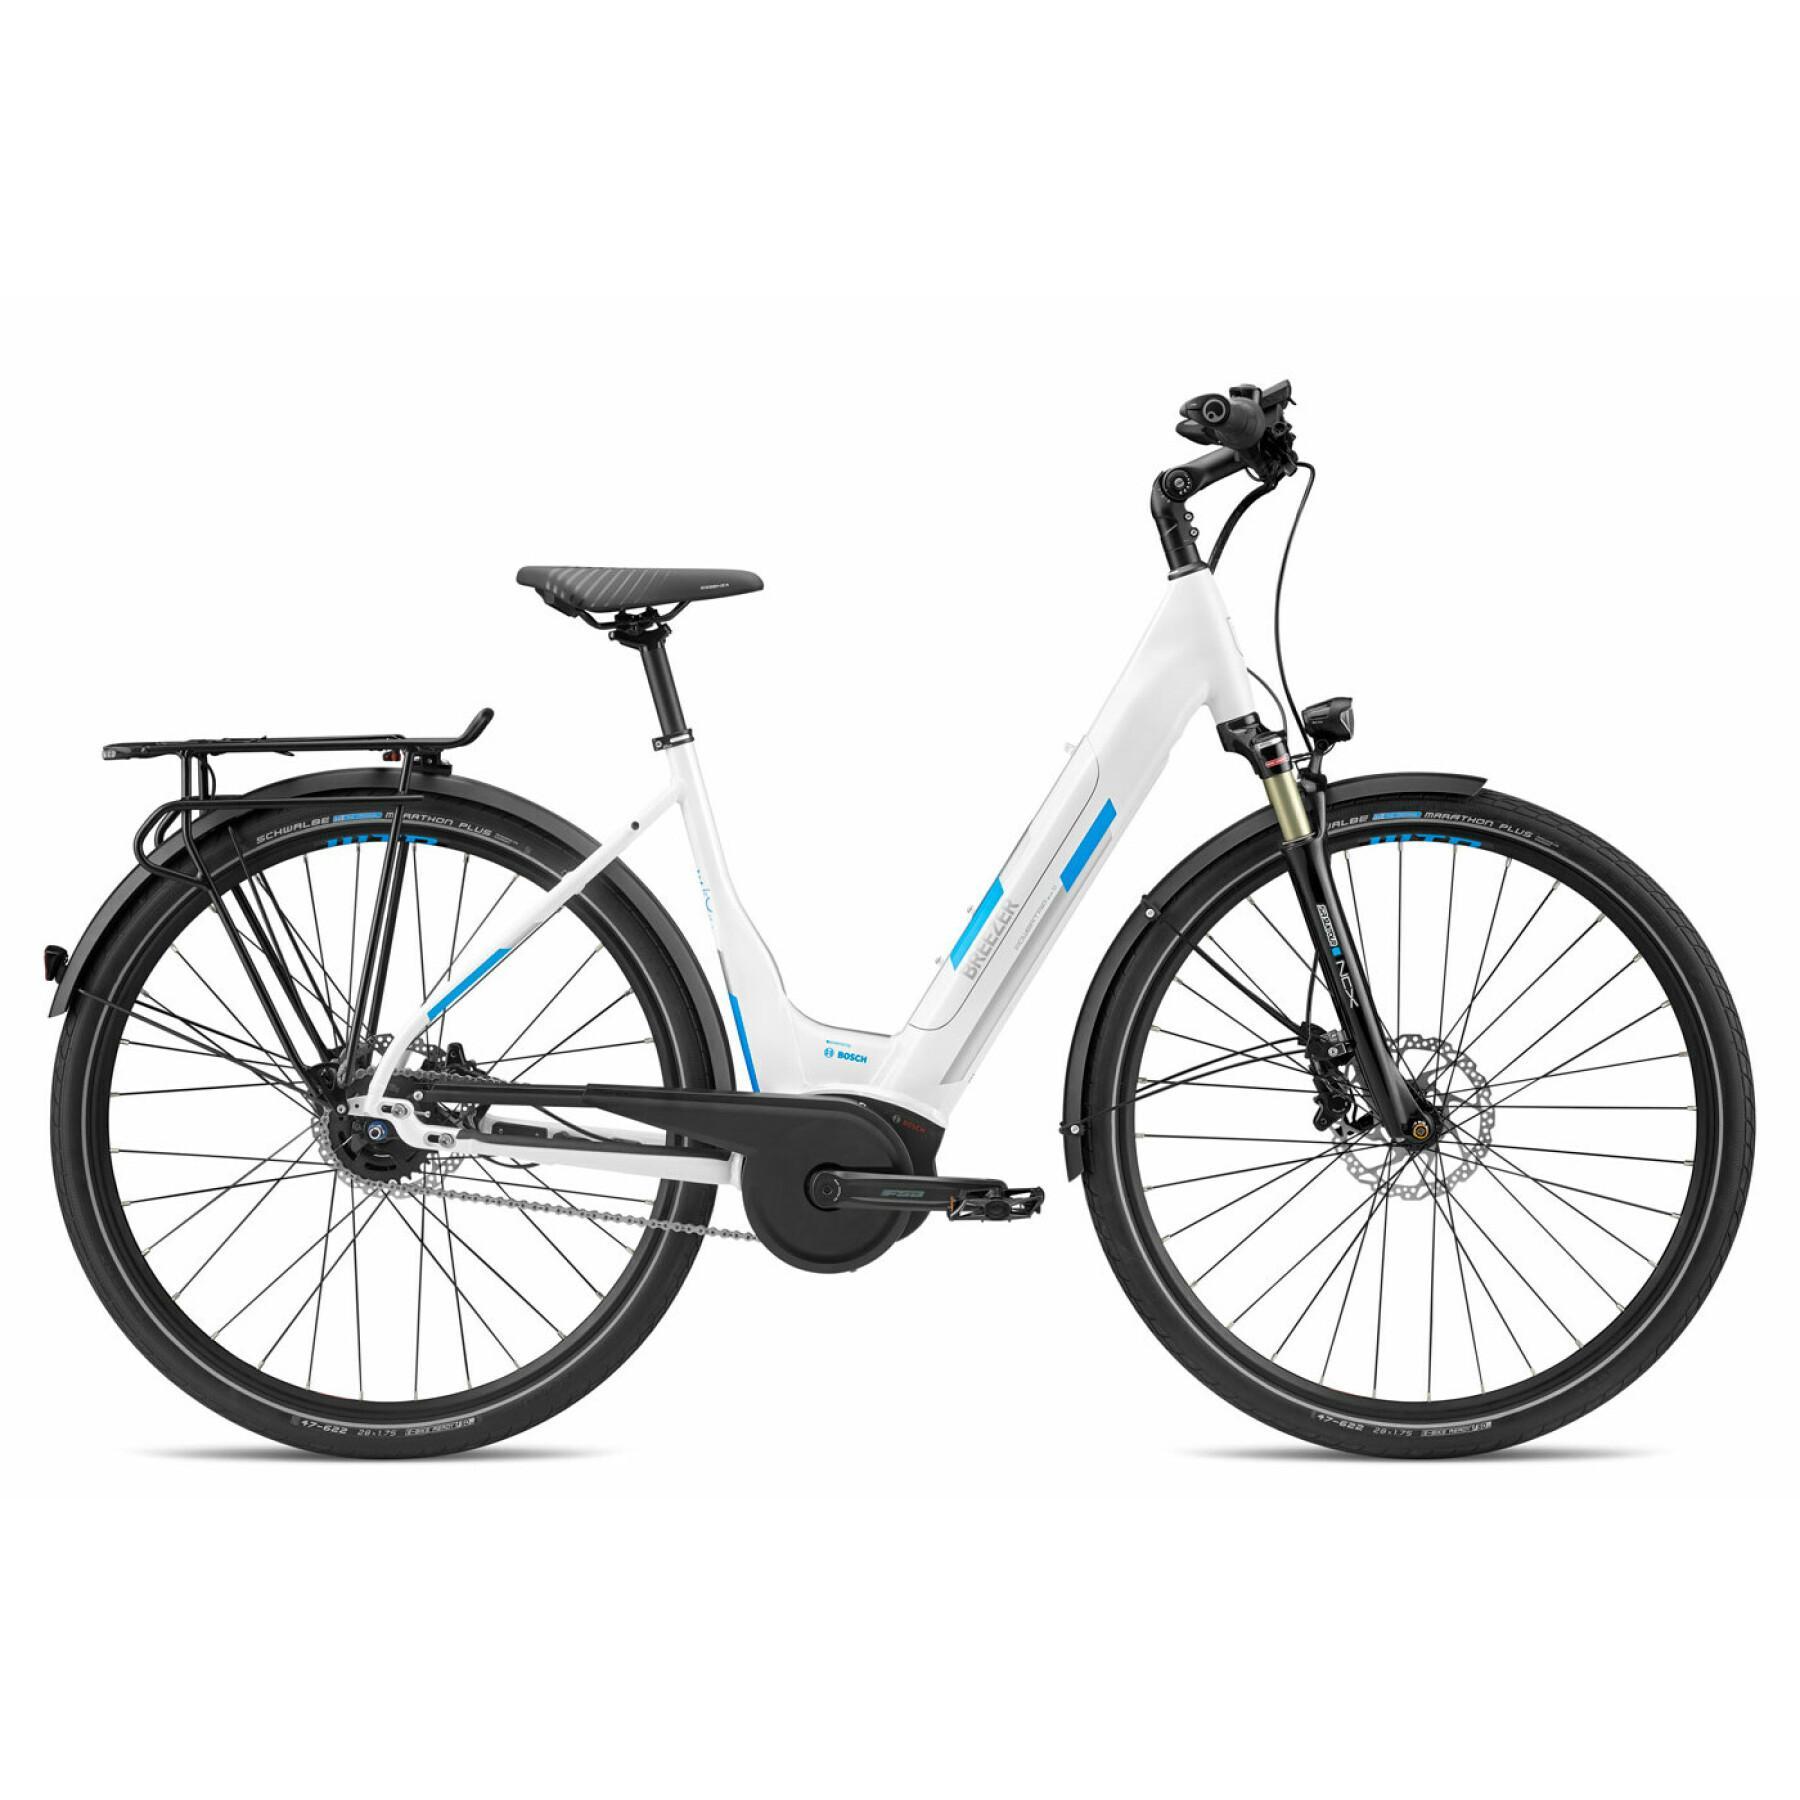 Bicicleta elétrica para mulheres Breezer Powertrip evo IG 1.1+ LS 2020